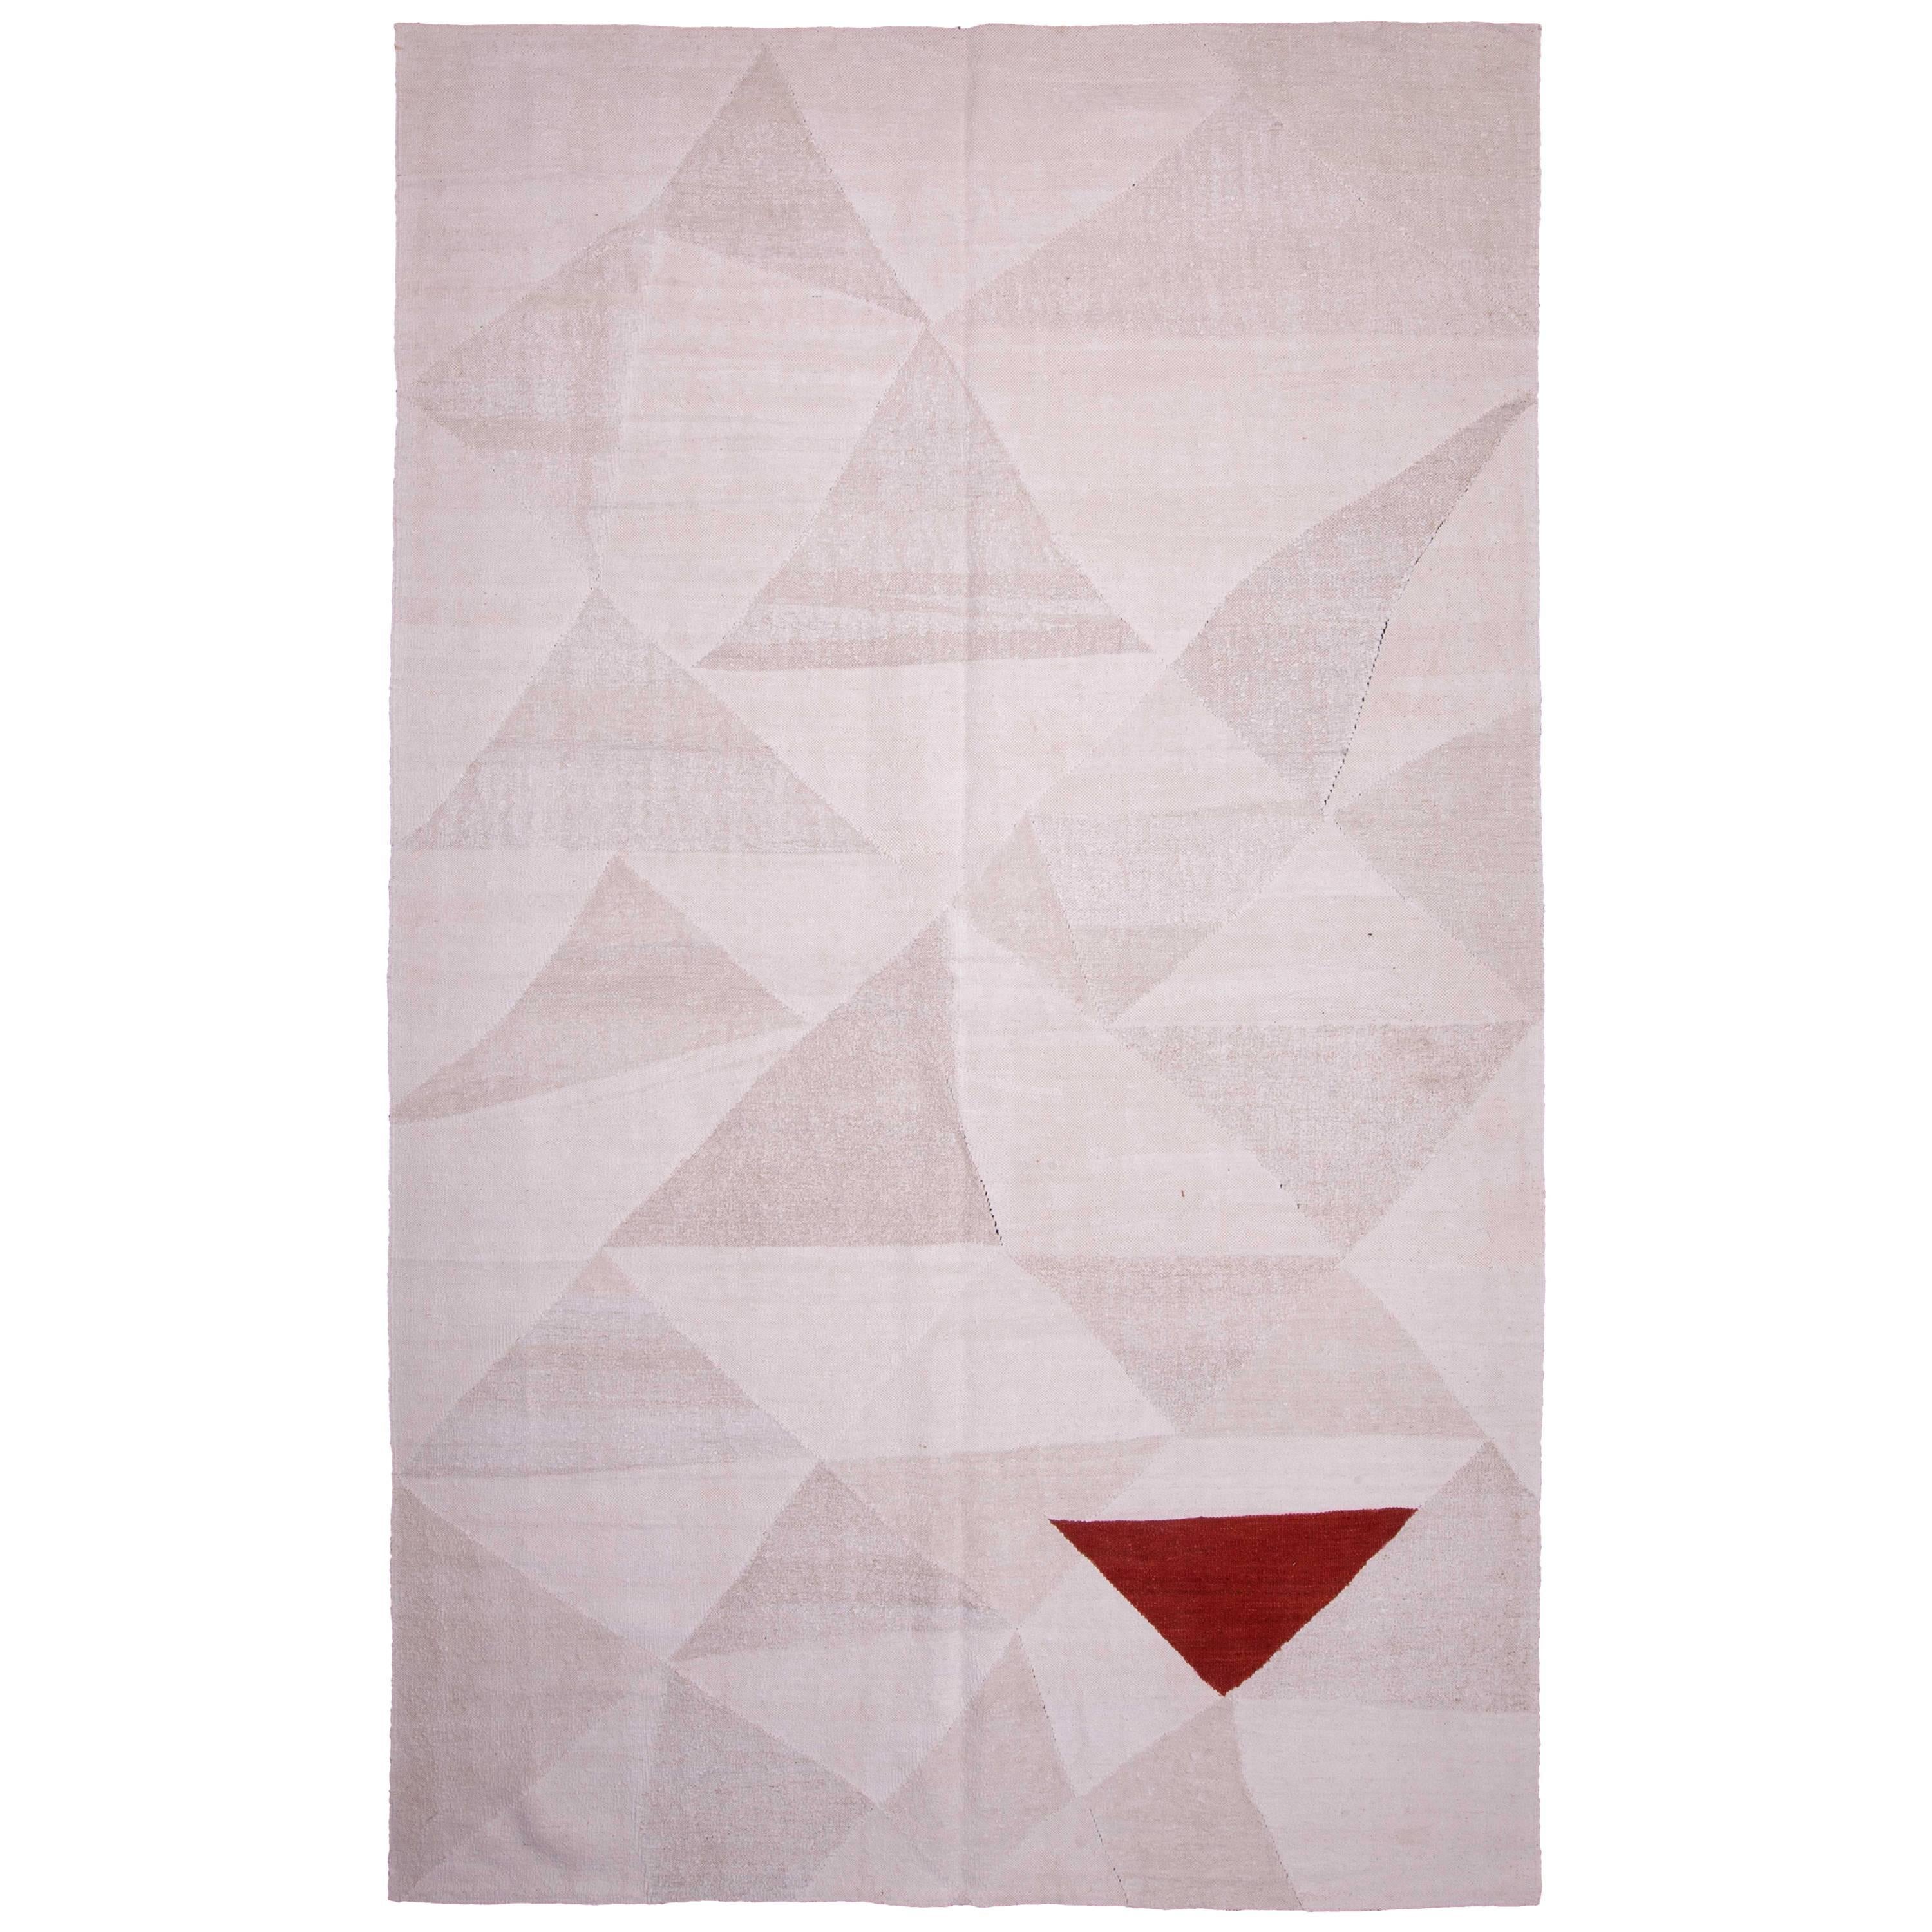 Anatolian White, Holy Triangle -V, A Contemporary Kilim by Seref Ozen